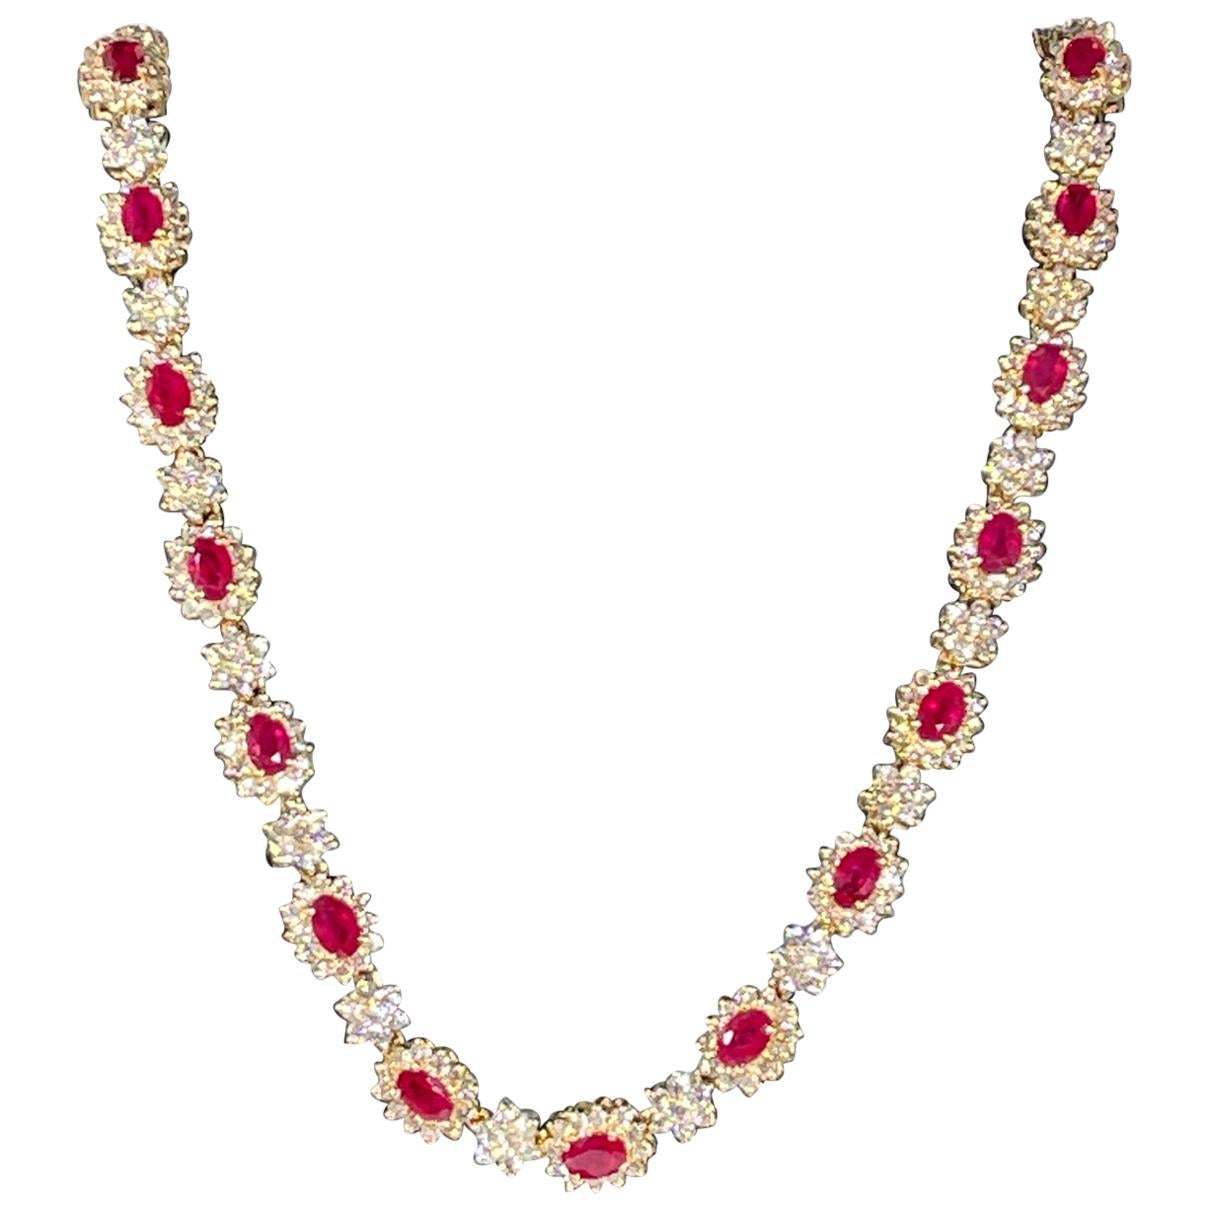 Designer Effy's 14ct Oval Shape Natural Ruby & 11 Ct Diamond Necklace 14KY Gold